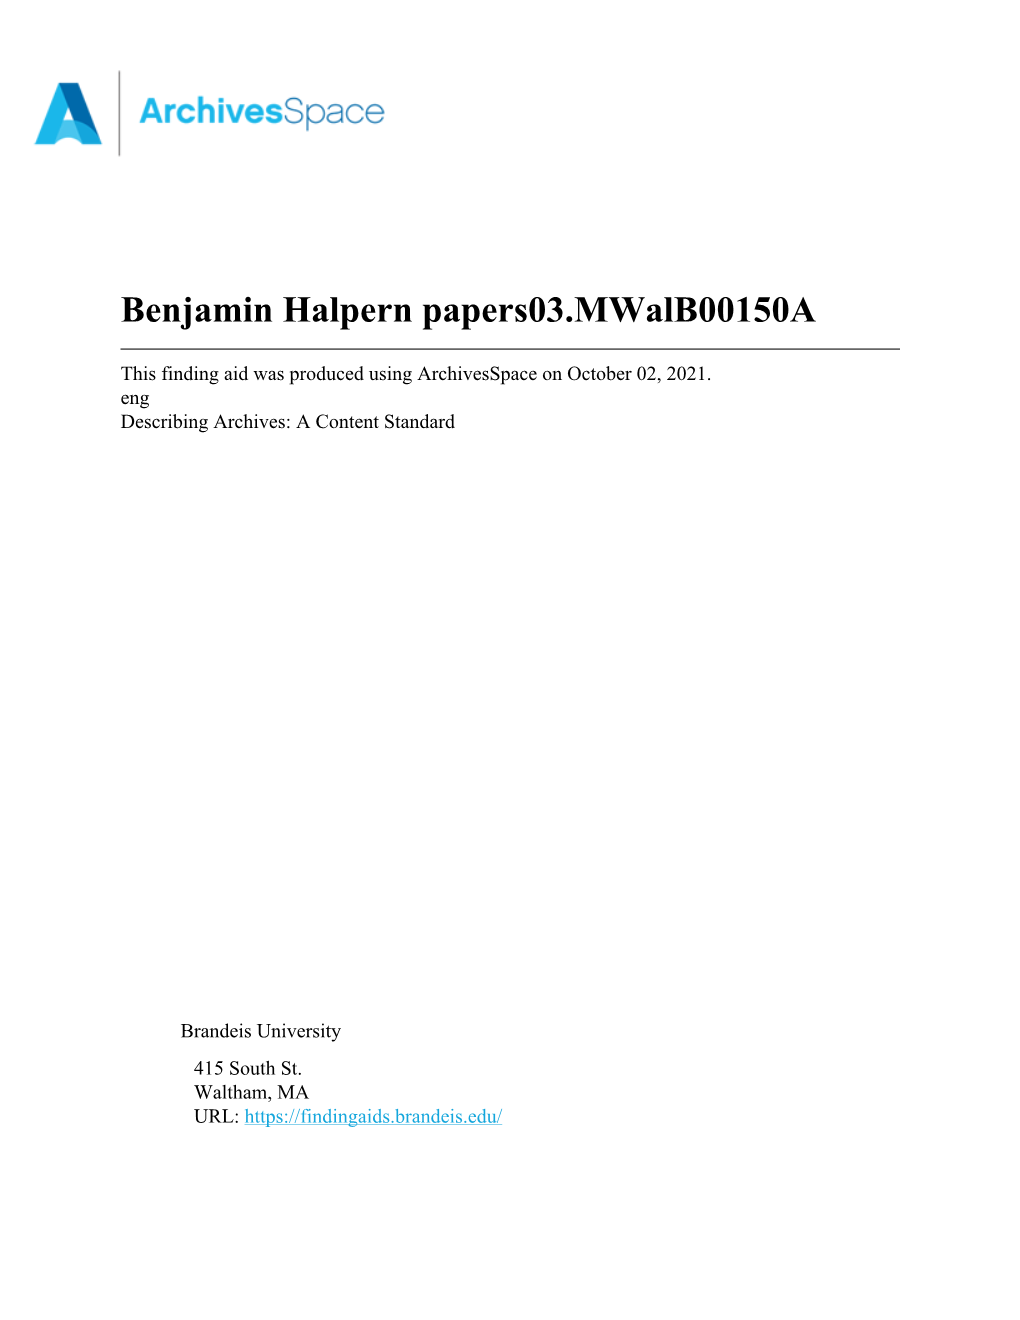 Benjamin Halpern Papers03.Mwalb00150a